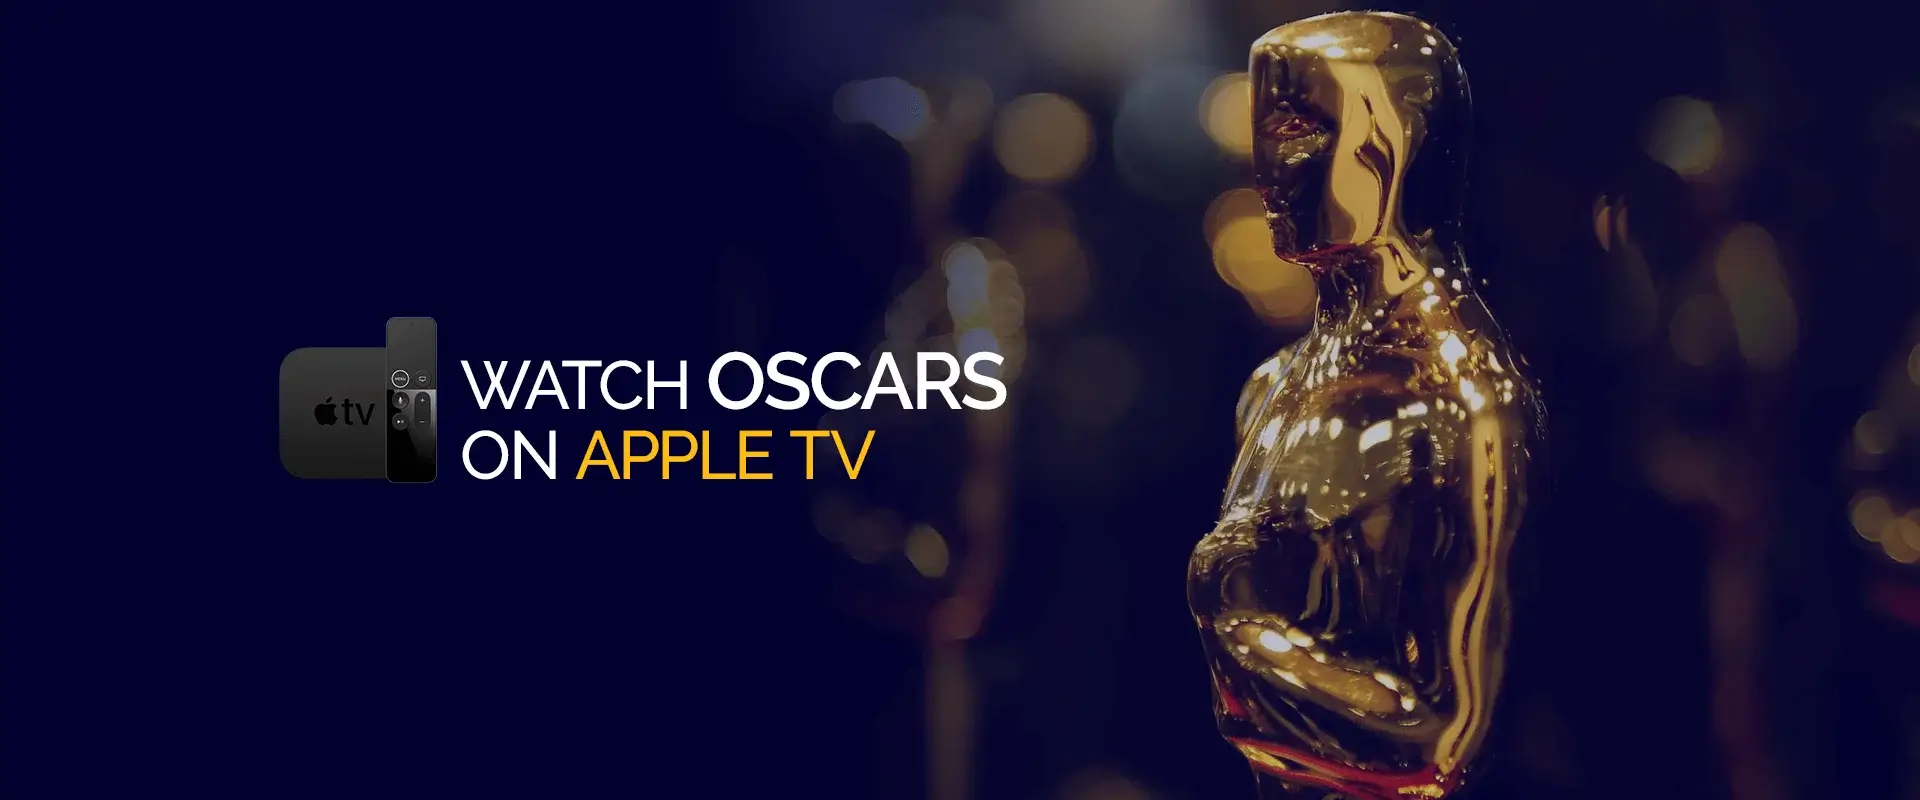 Watch Oscars 2023 on Apple TV